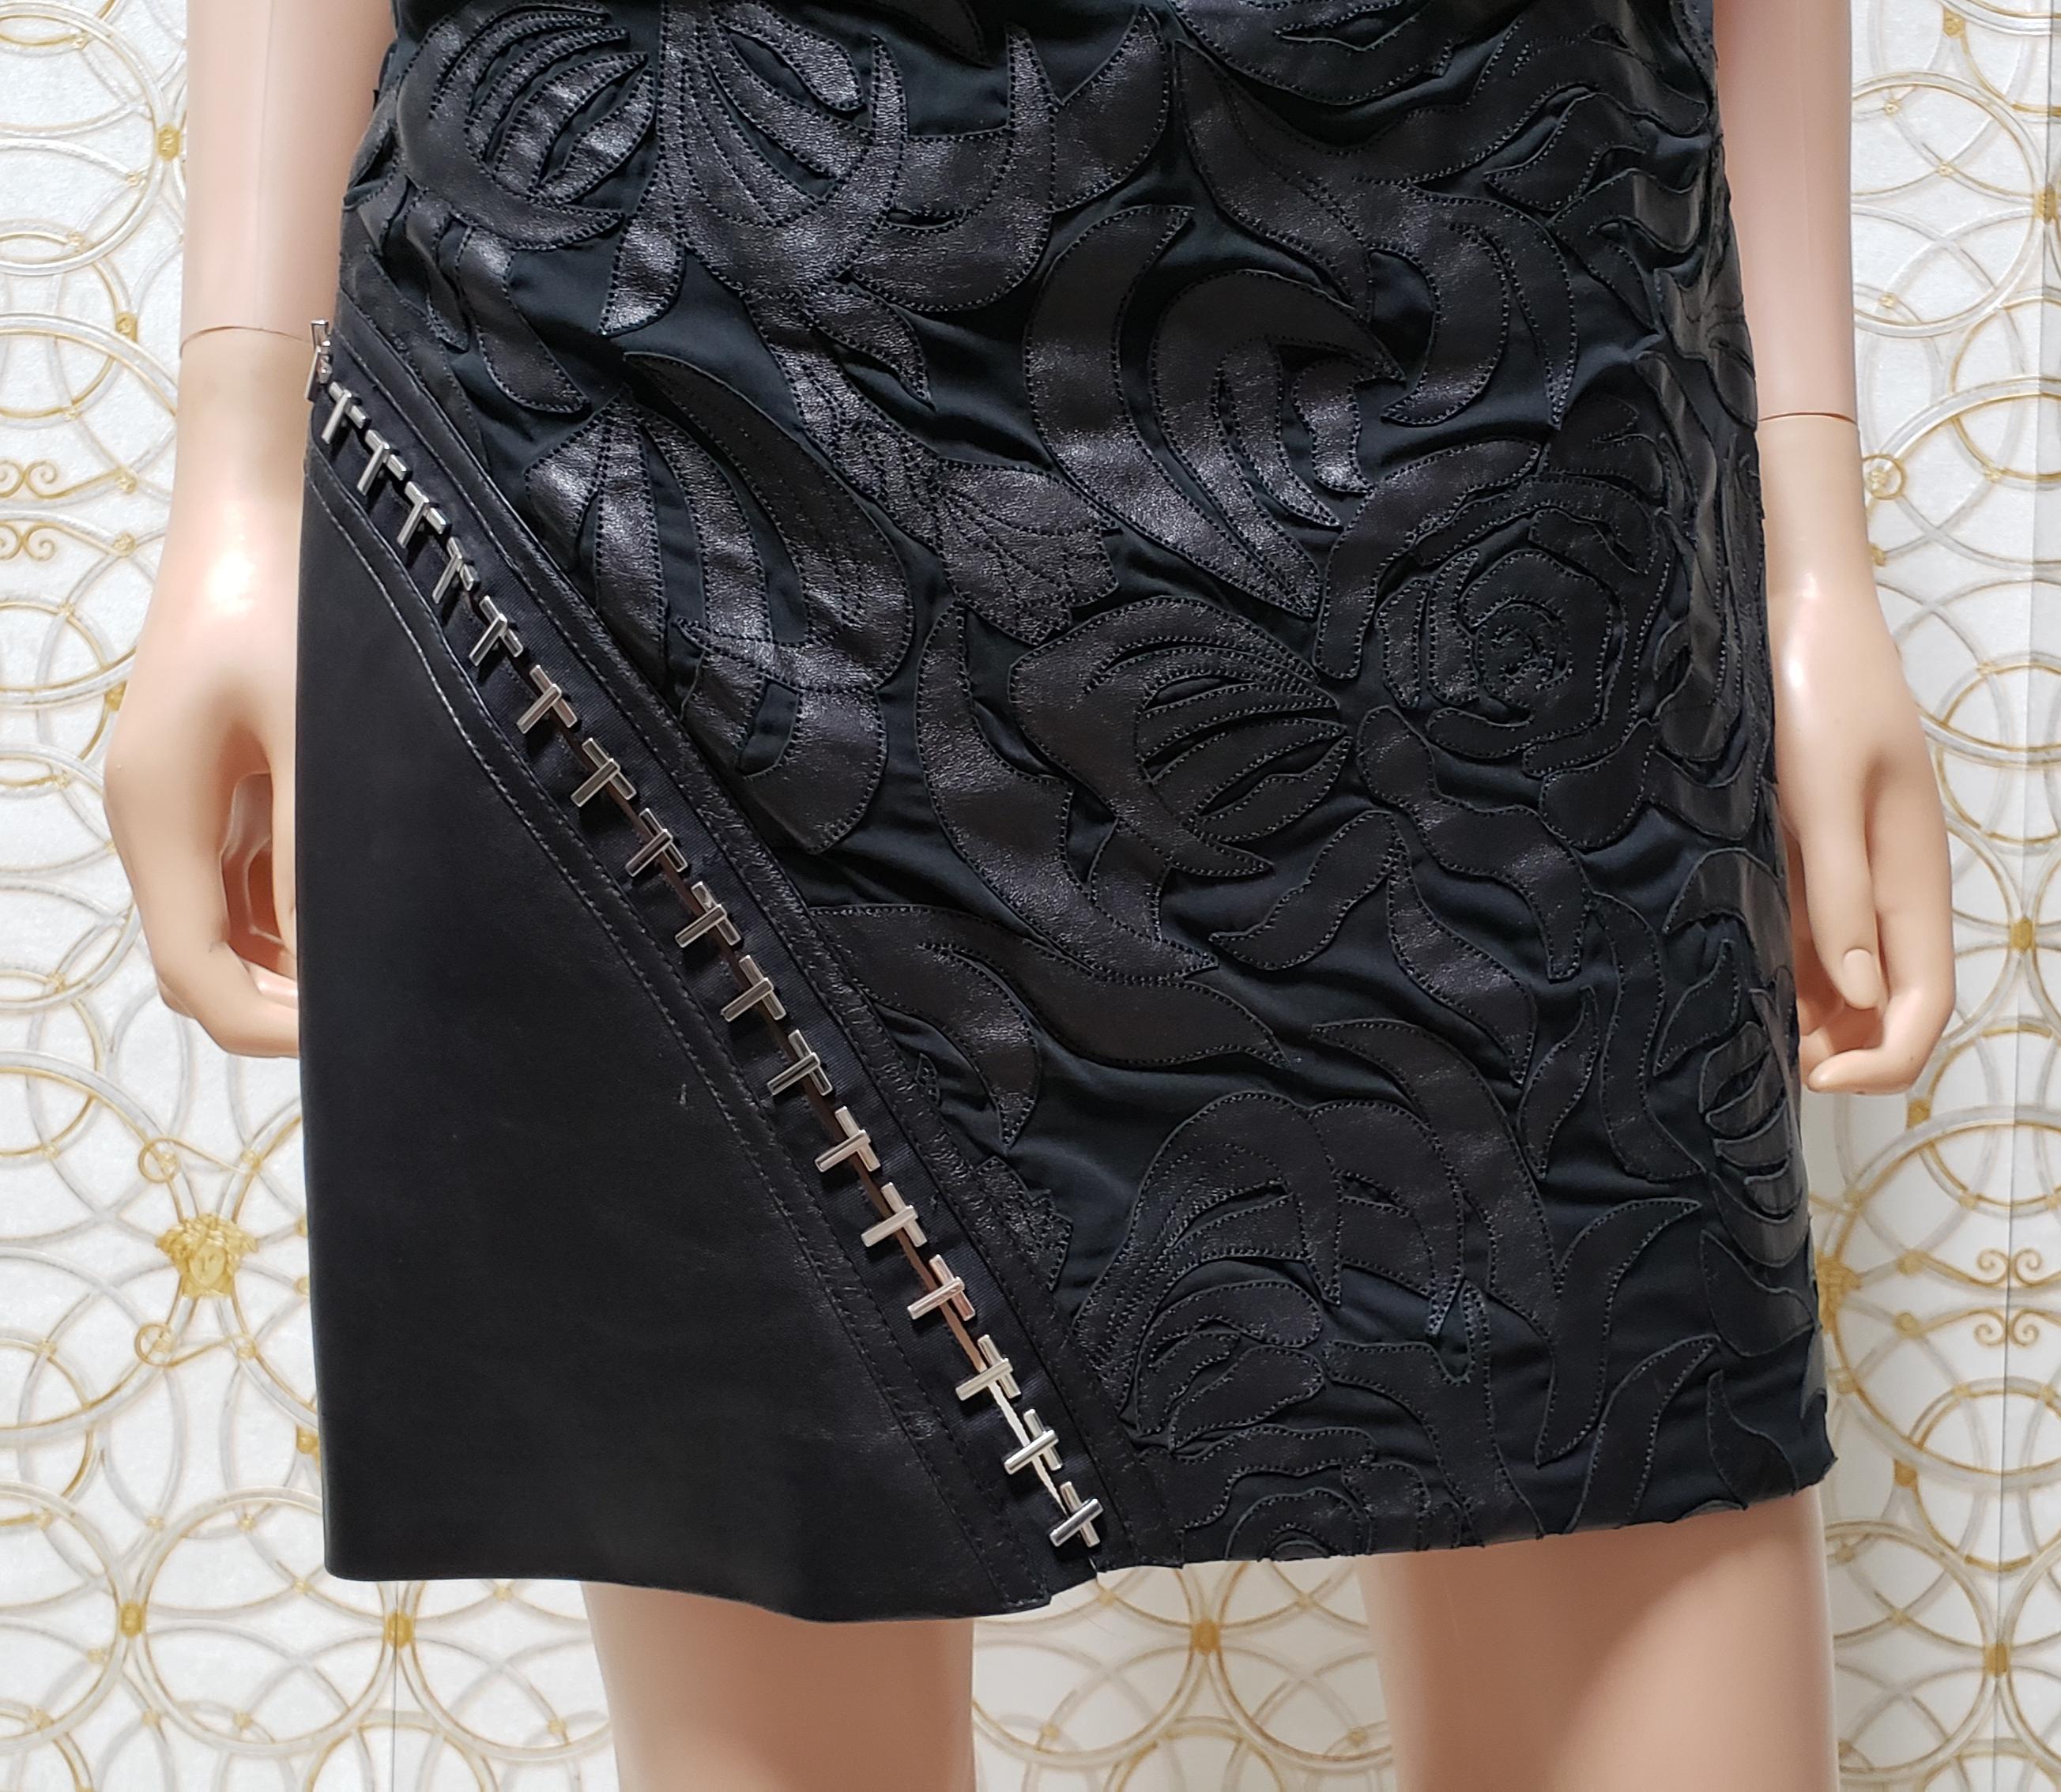 Versace Black Floral Detail Leather Dress 38 - 2 (4) For Sale 5